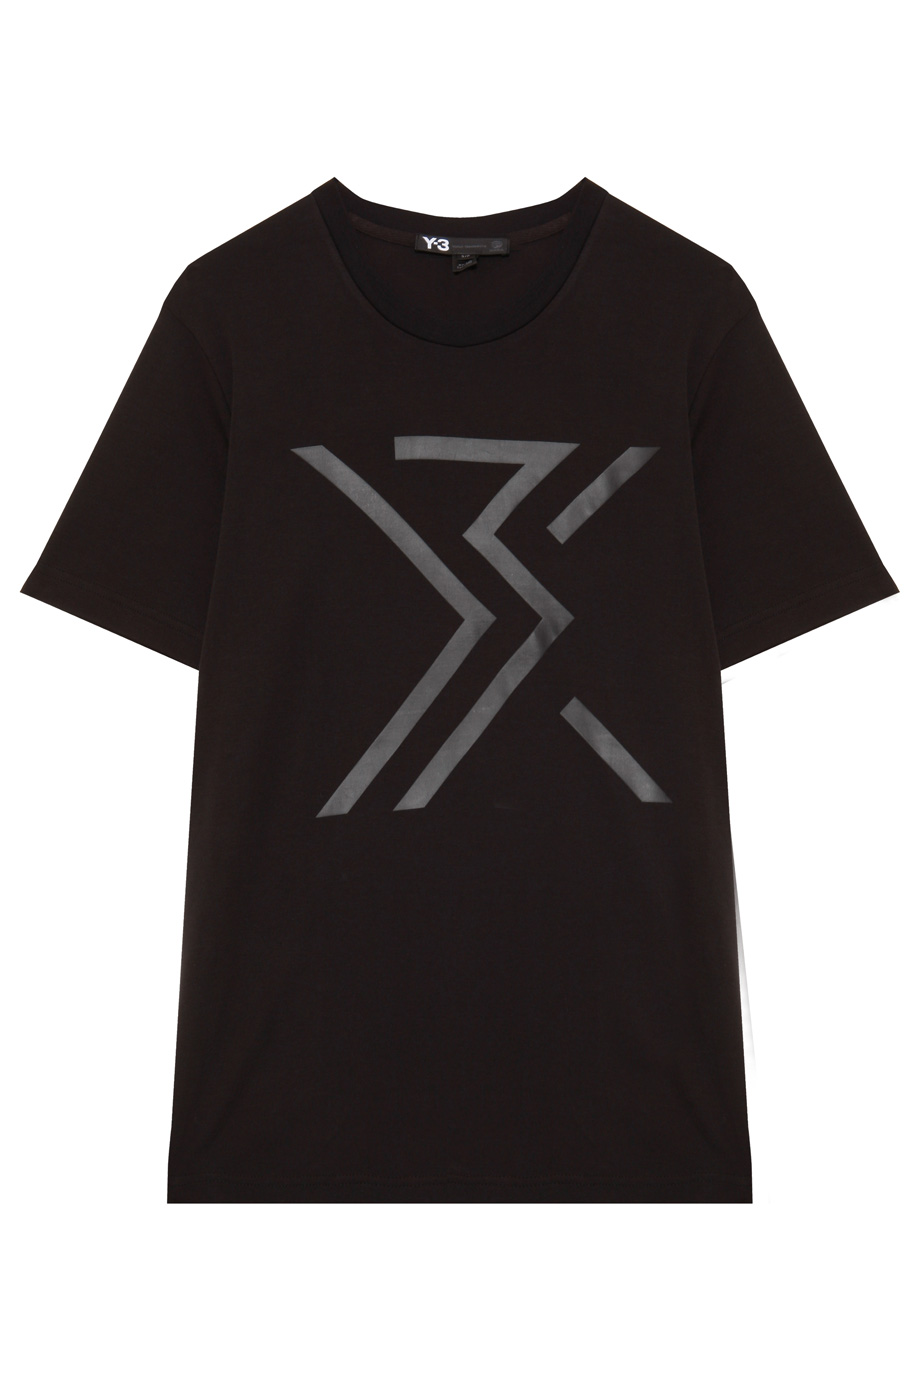 Y-3 Graphic Tshirt in Black for Men | Lyst